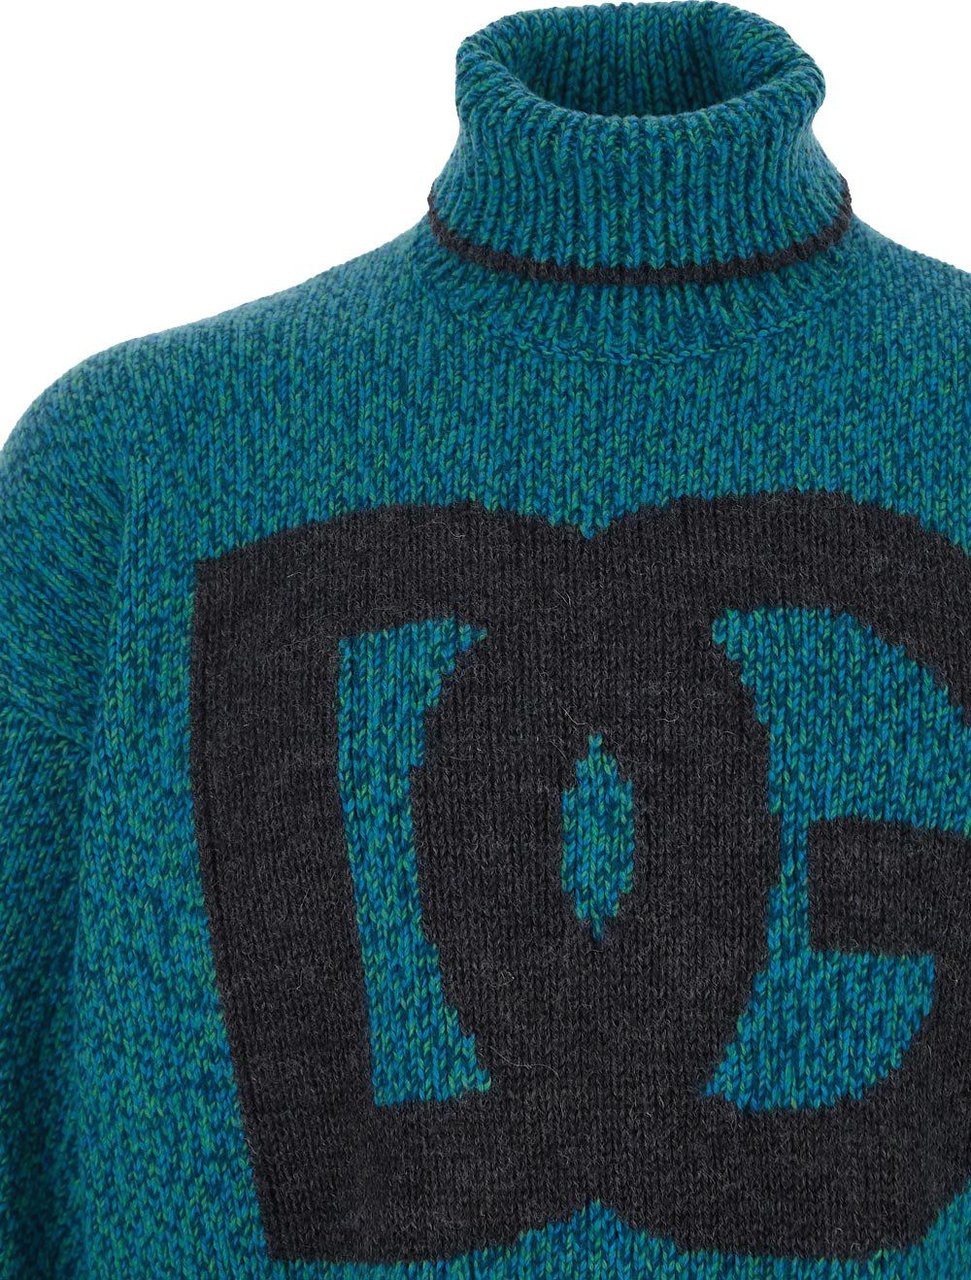 Dolce & Gabbana DG Knitwear With Turtleneck Divers